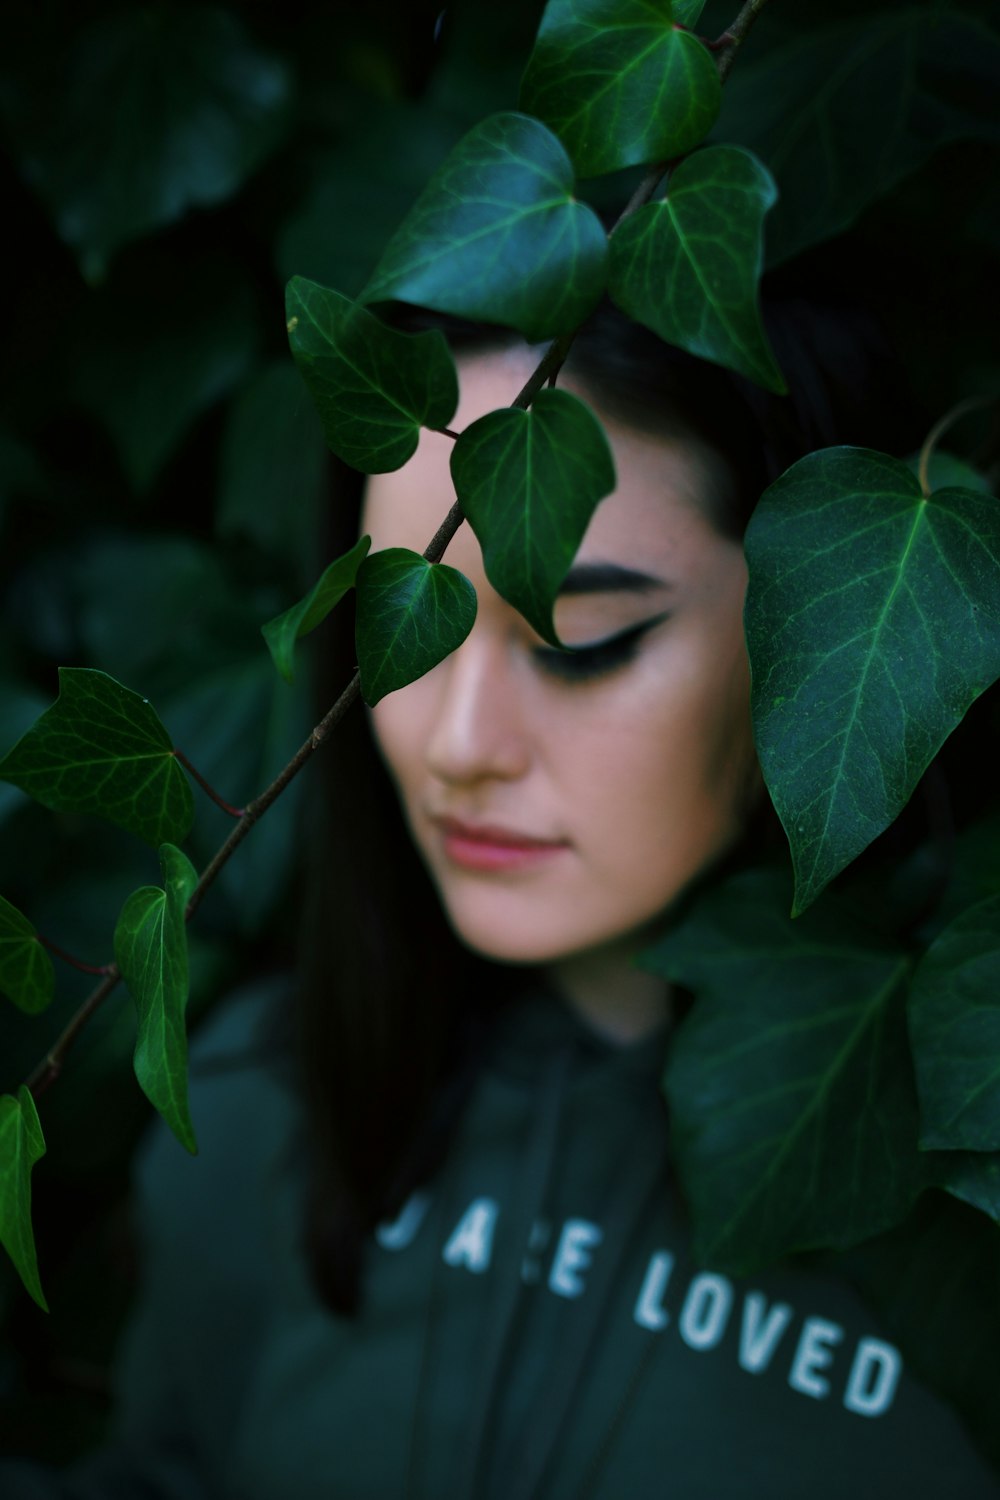 woman in black shirt hiding behind green leaves